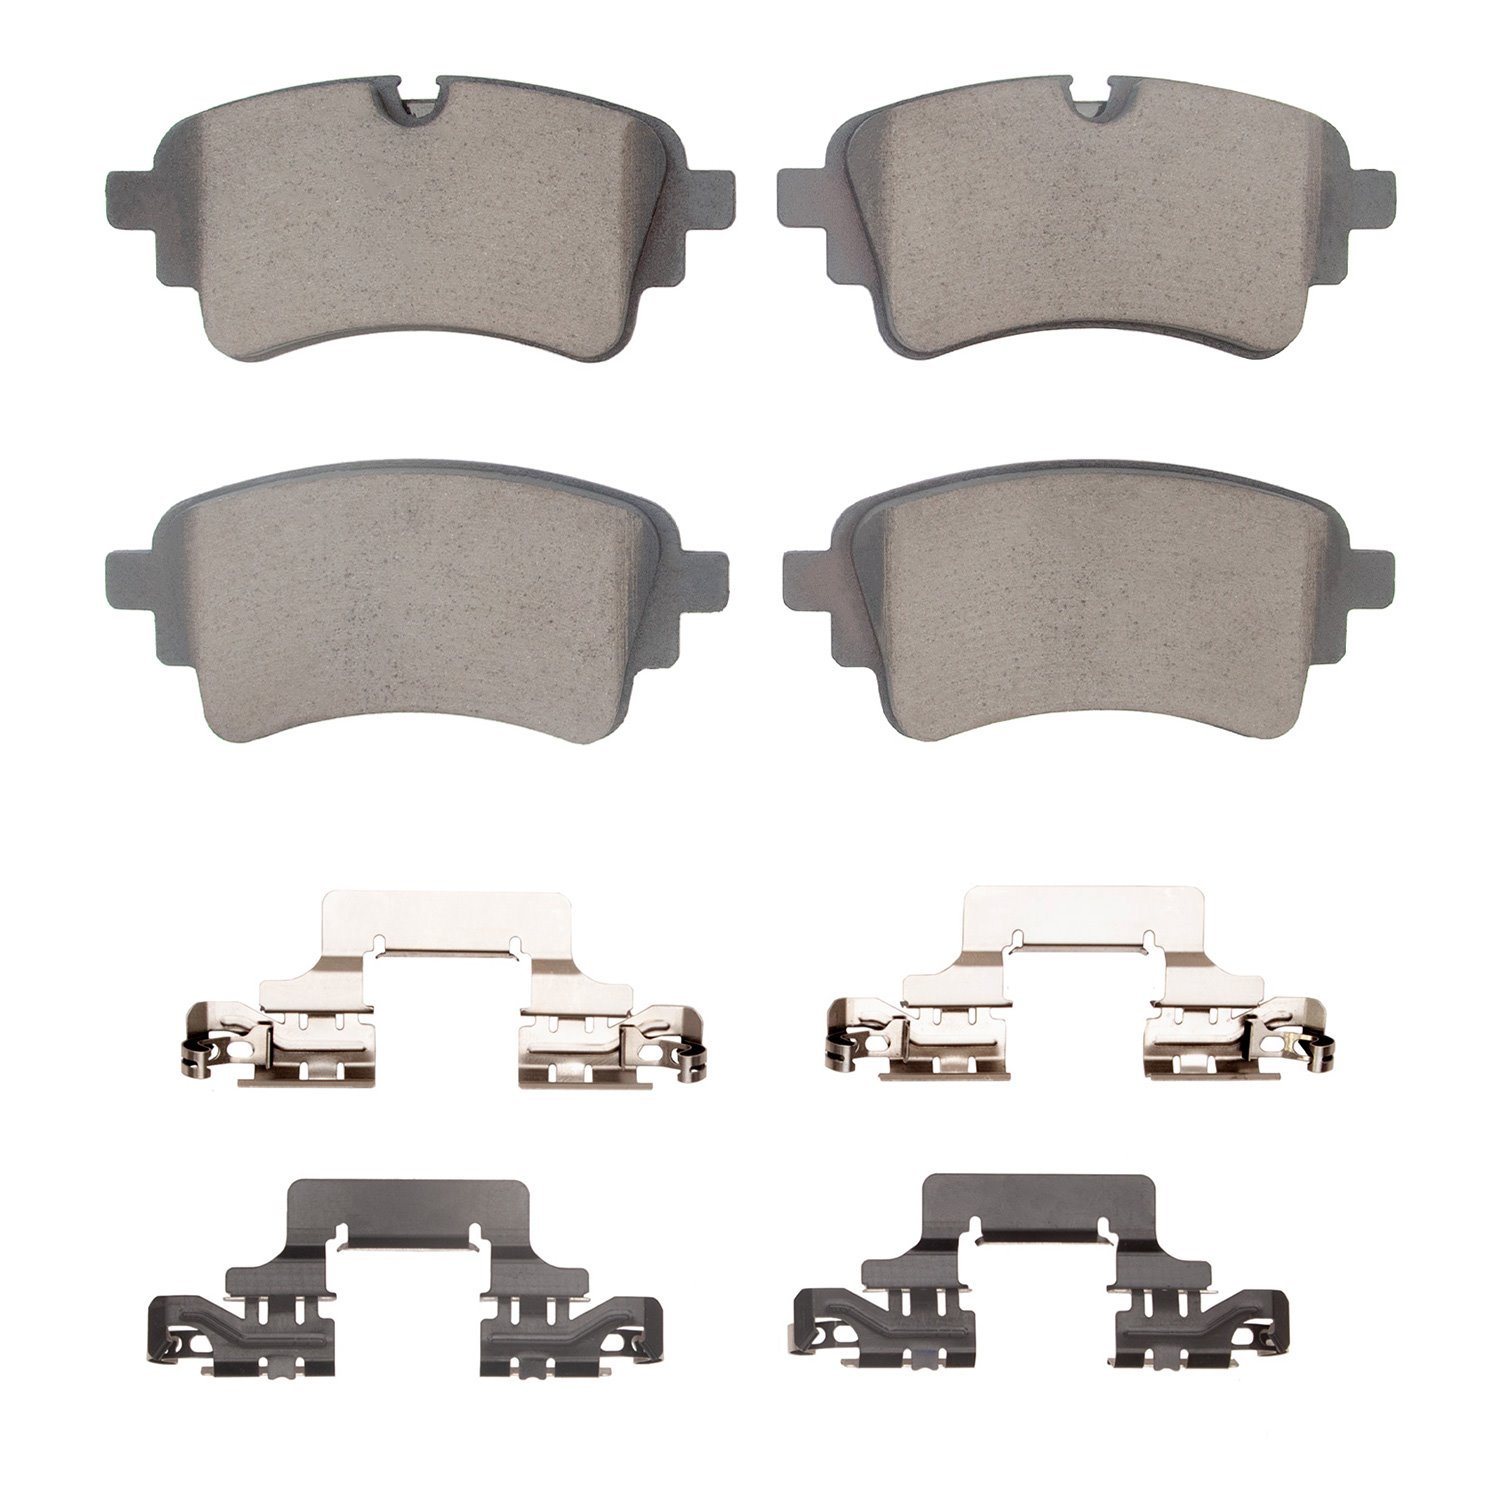 1552-2364-01 5000 Advanced Low-Metallic Brake Pads & Hardware Kit, Fits Select Audi/Volkswagen, Position: Rear